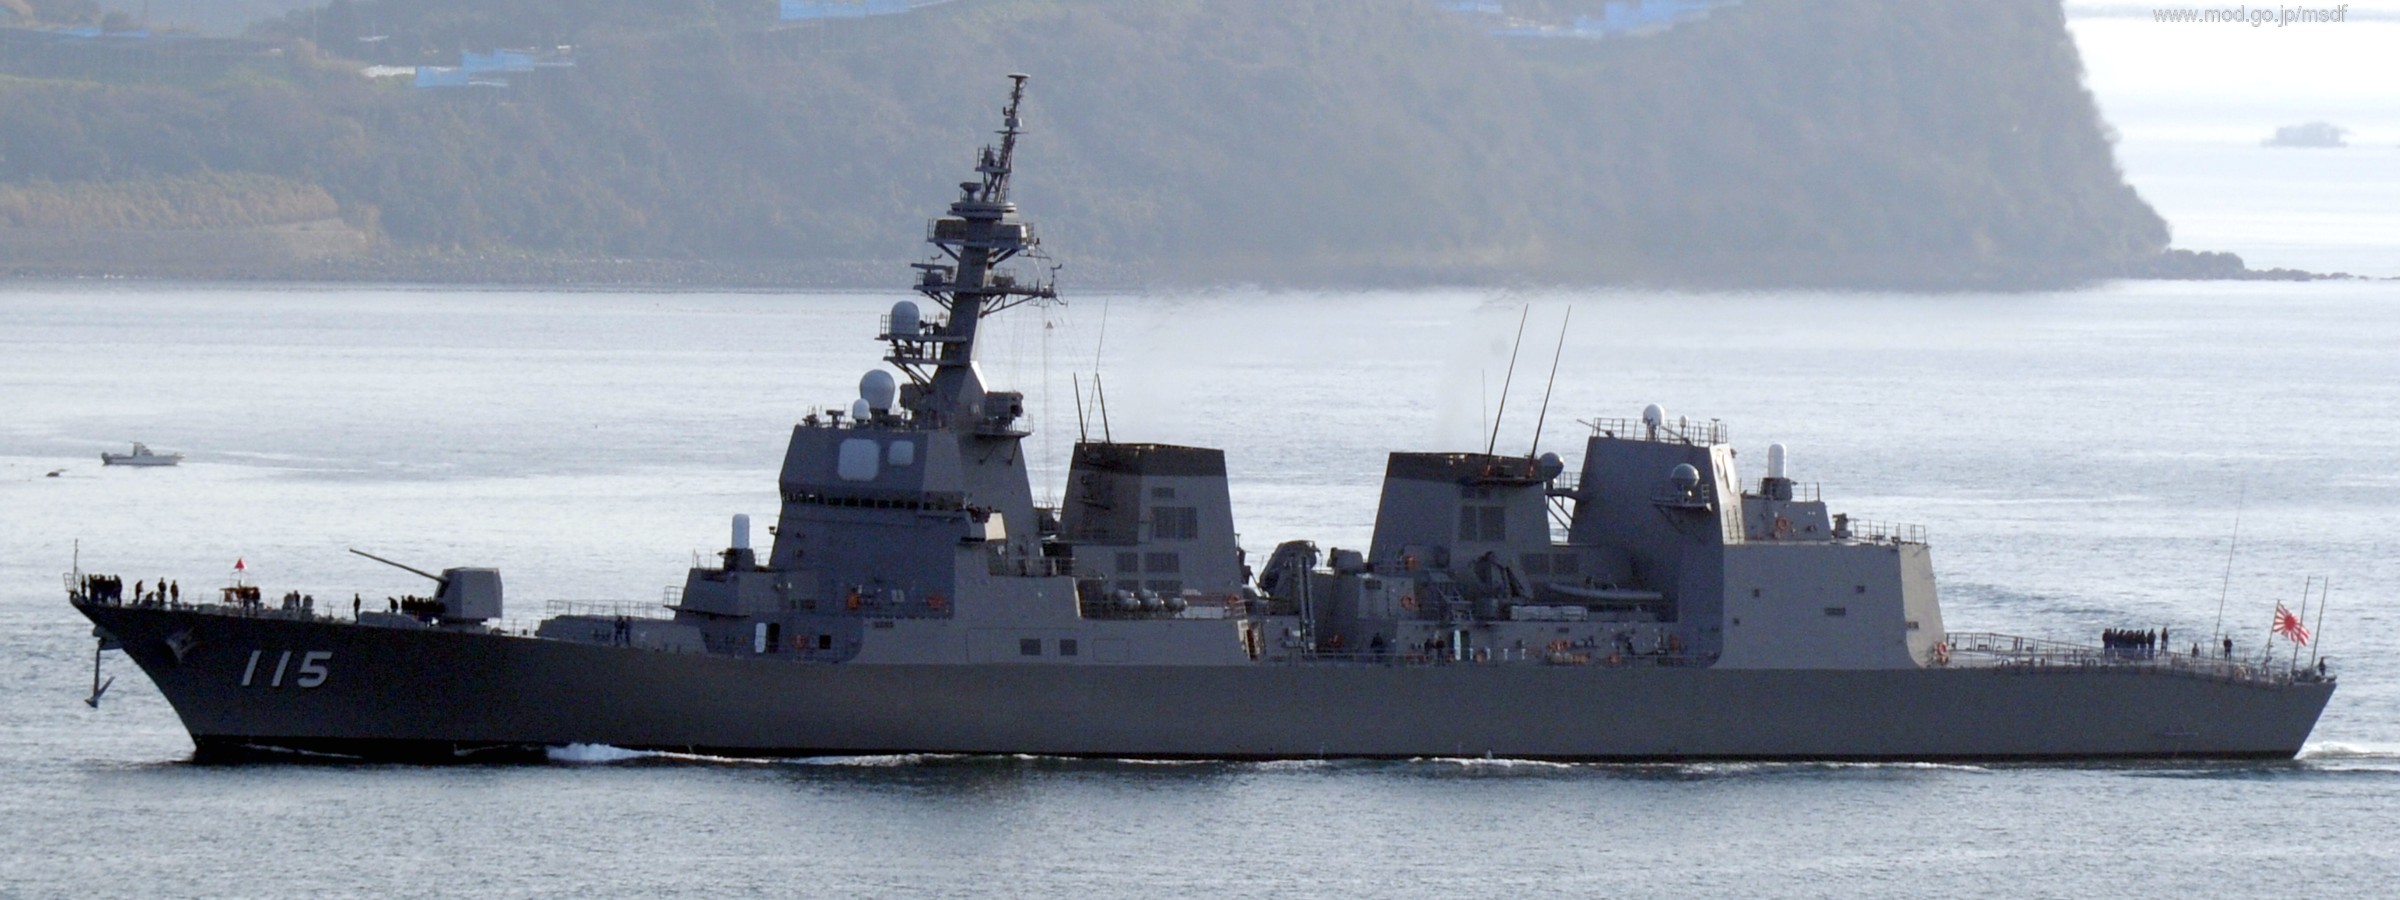 dd-115 js akizuki class destroyer japan maritime self defense force jmsdf 05